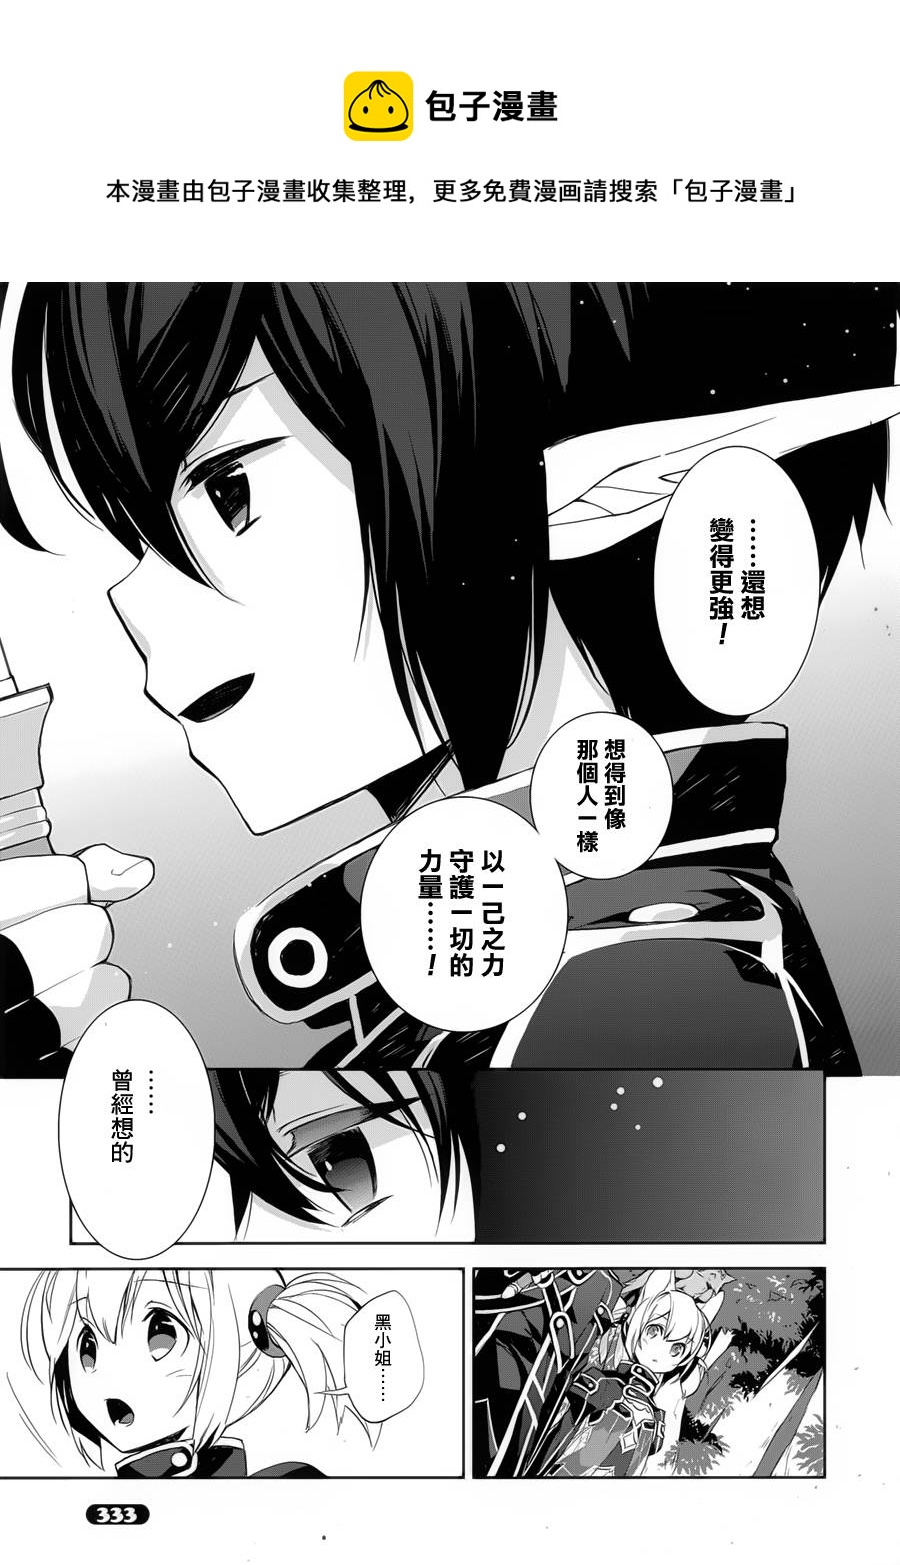 Sword Art Online少女們的樂章 - 第02話 - 4